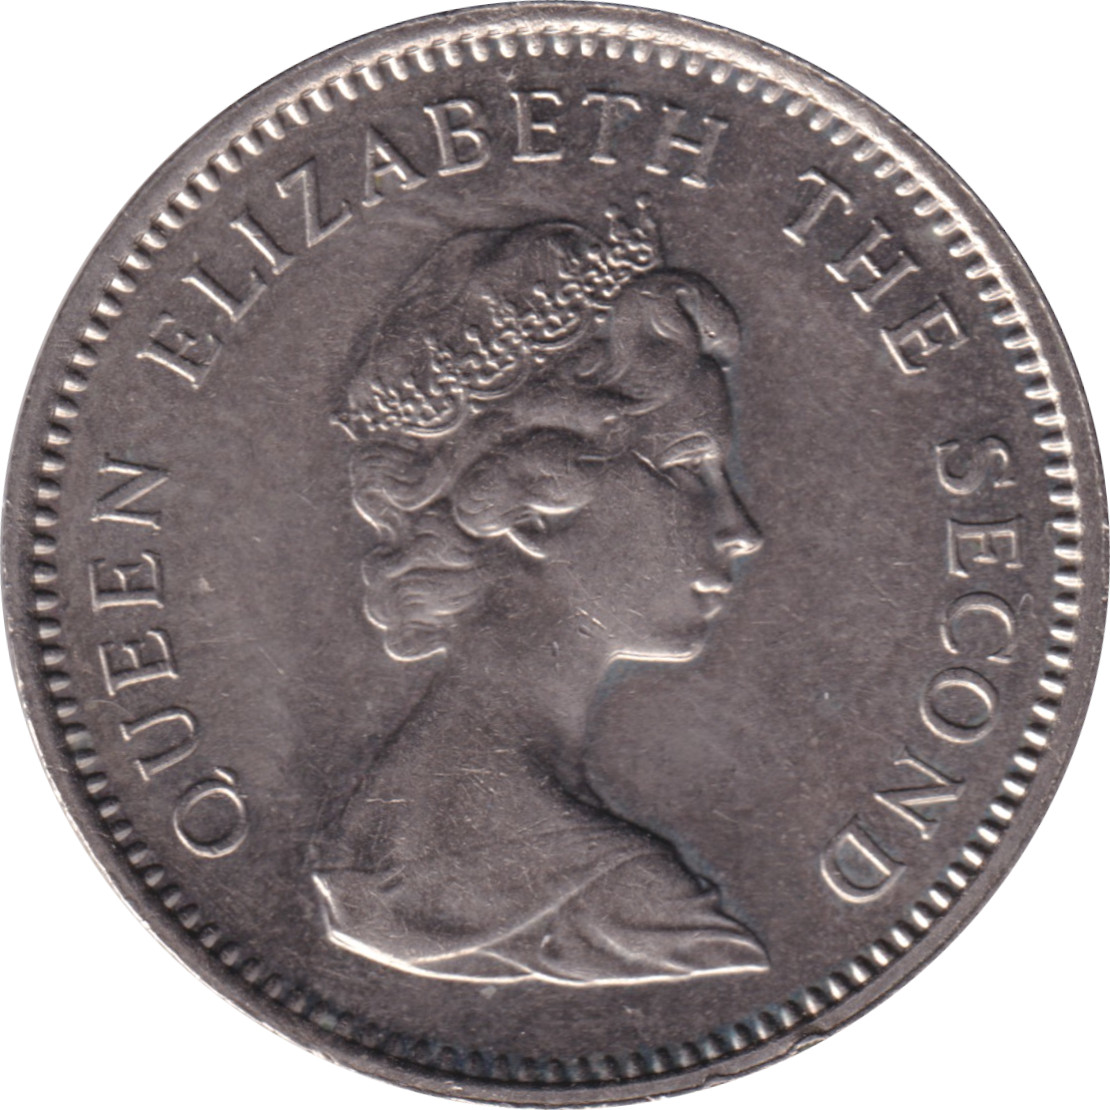 5 pence - Elizabeth II - Buste jeune - New Pence